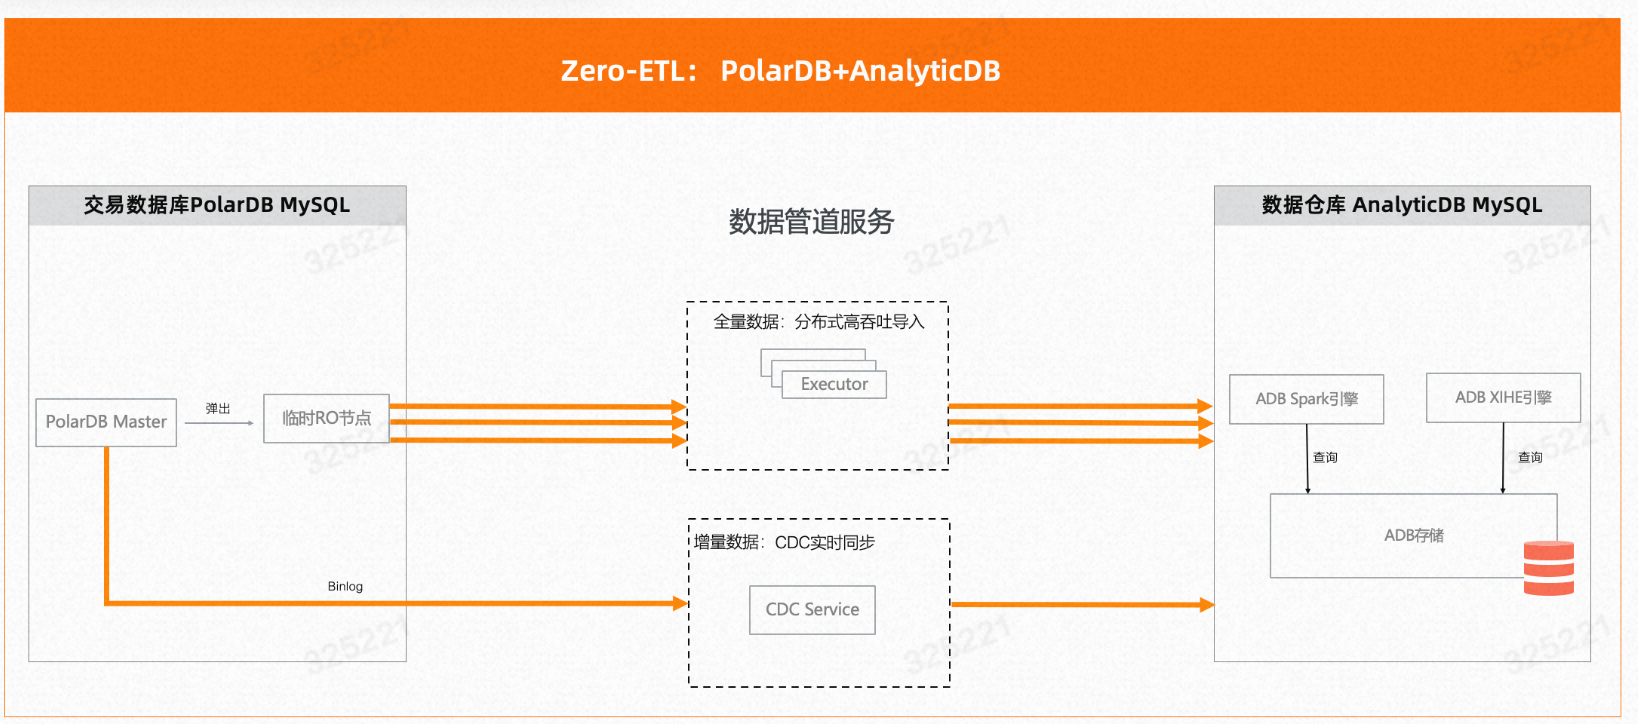 PolarDB +AnalyticDB Zero-ETL ：免费同步数据到ADB，享受数据流通新体验